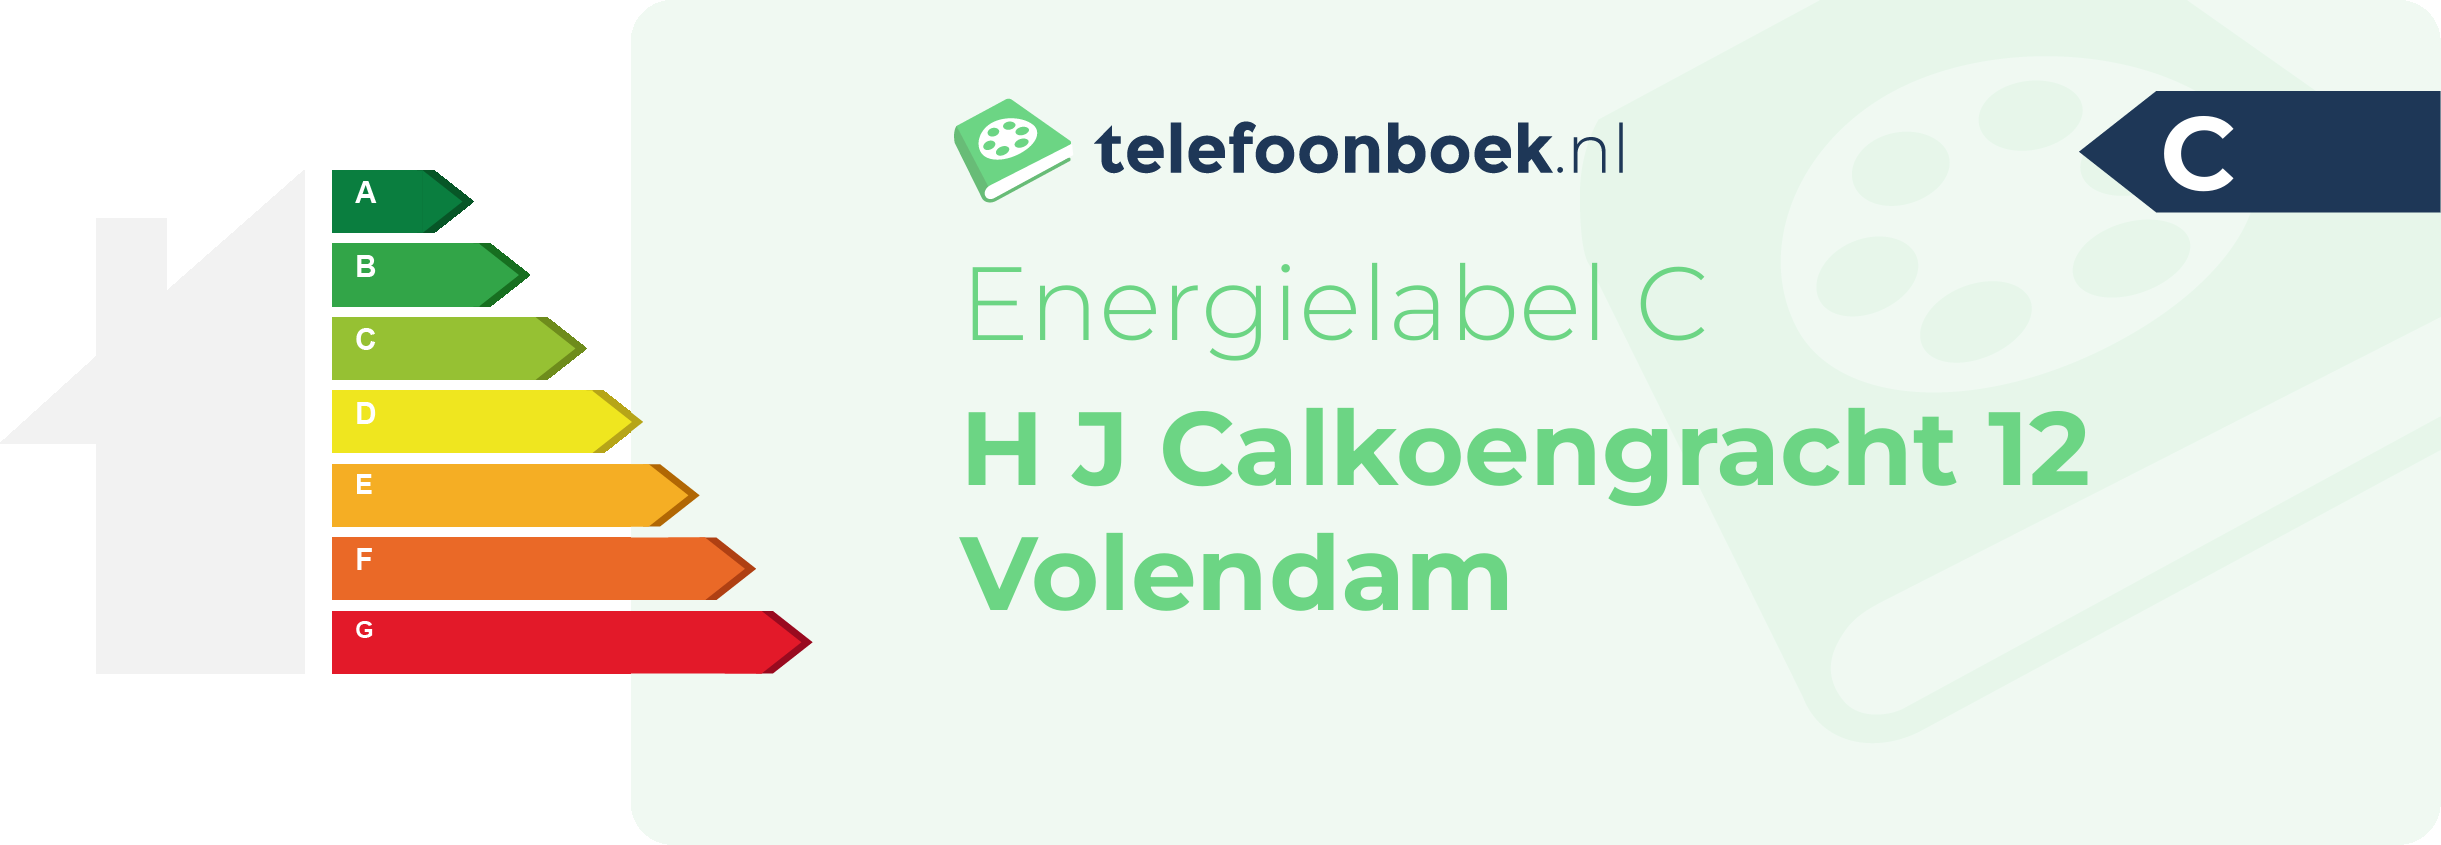 Energielabel H J Calkoengracht 12 Volendam